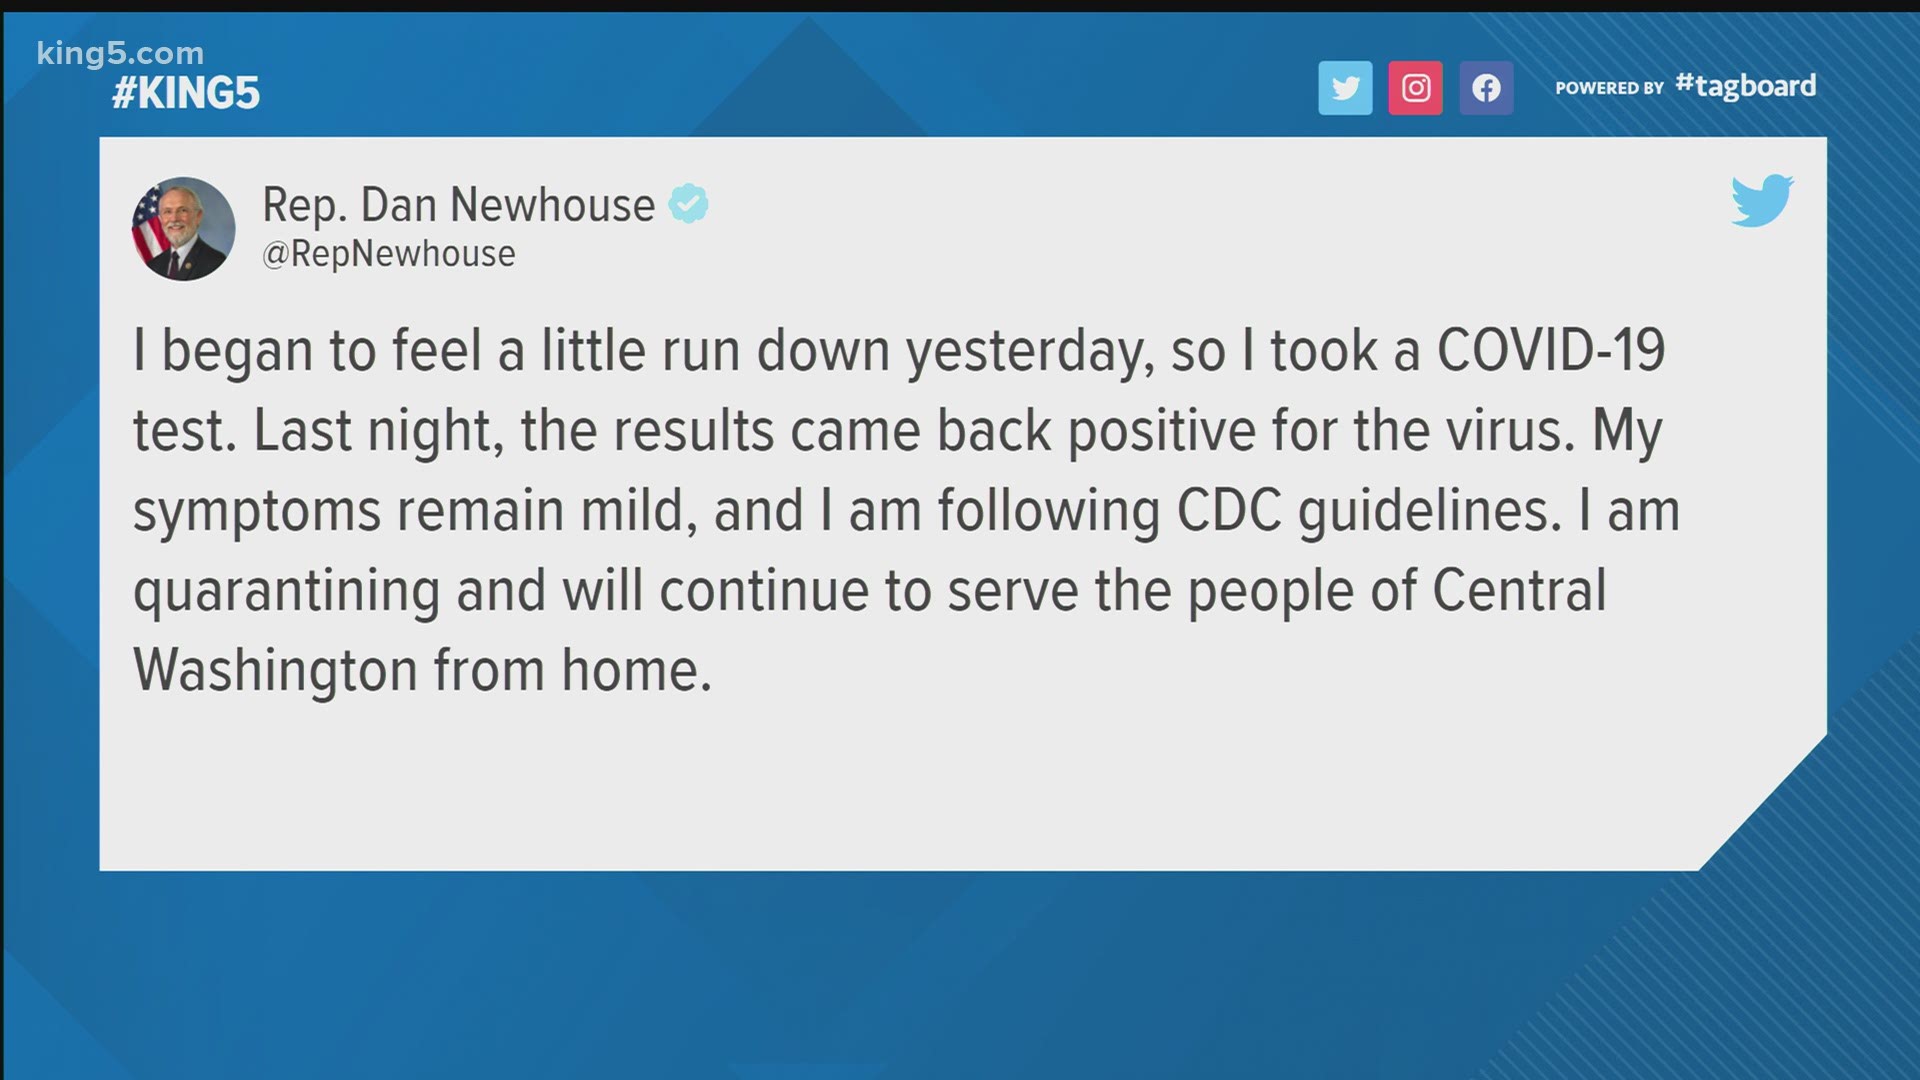 U.S. Rep. Dan Newhouse, who represents central Washington, says his coronavirus symptoms are mild, and he's quarantining at home.